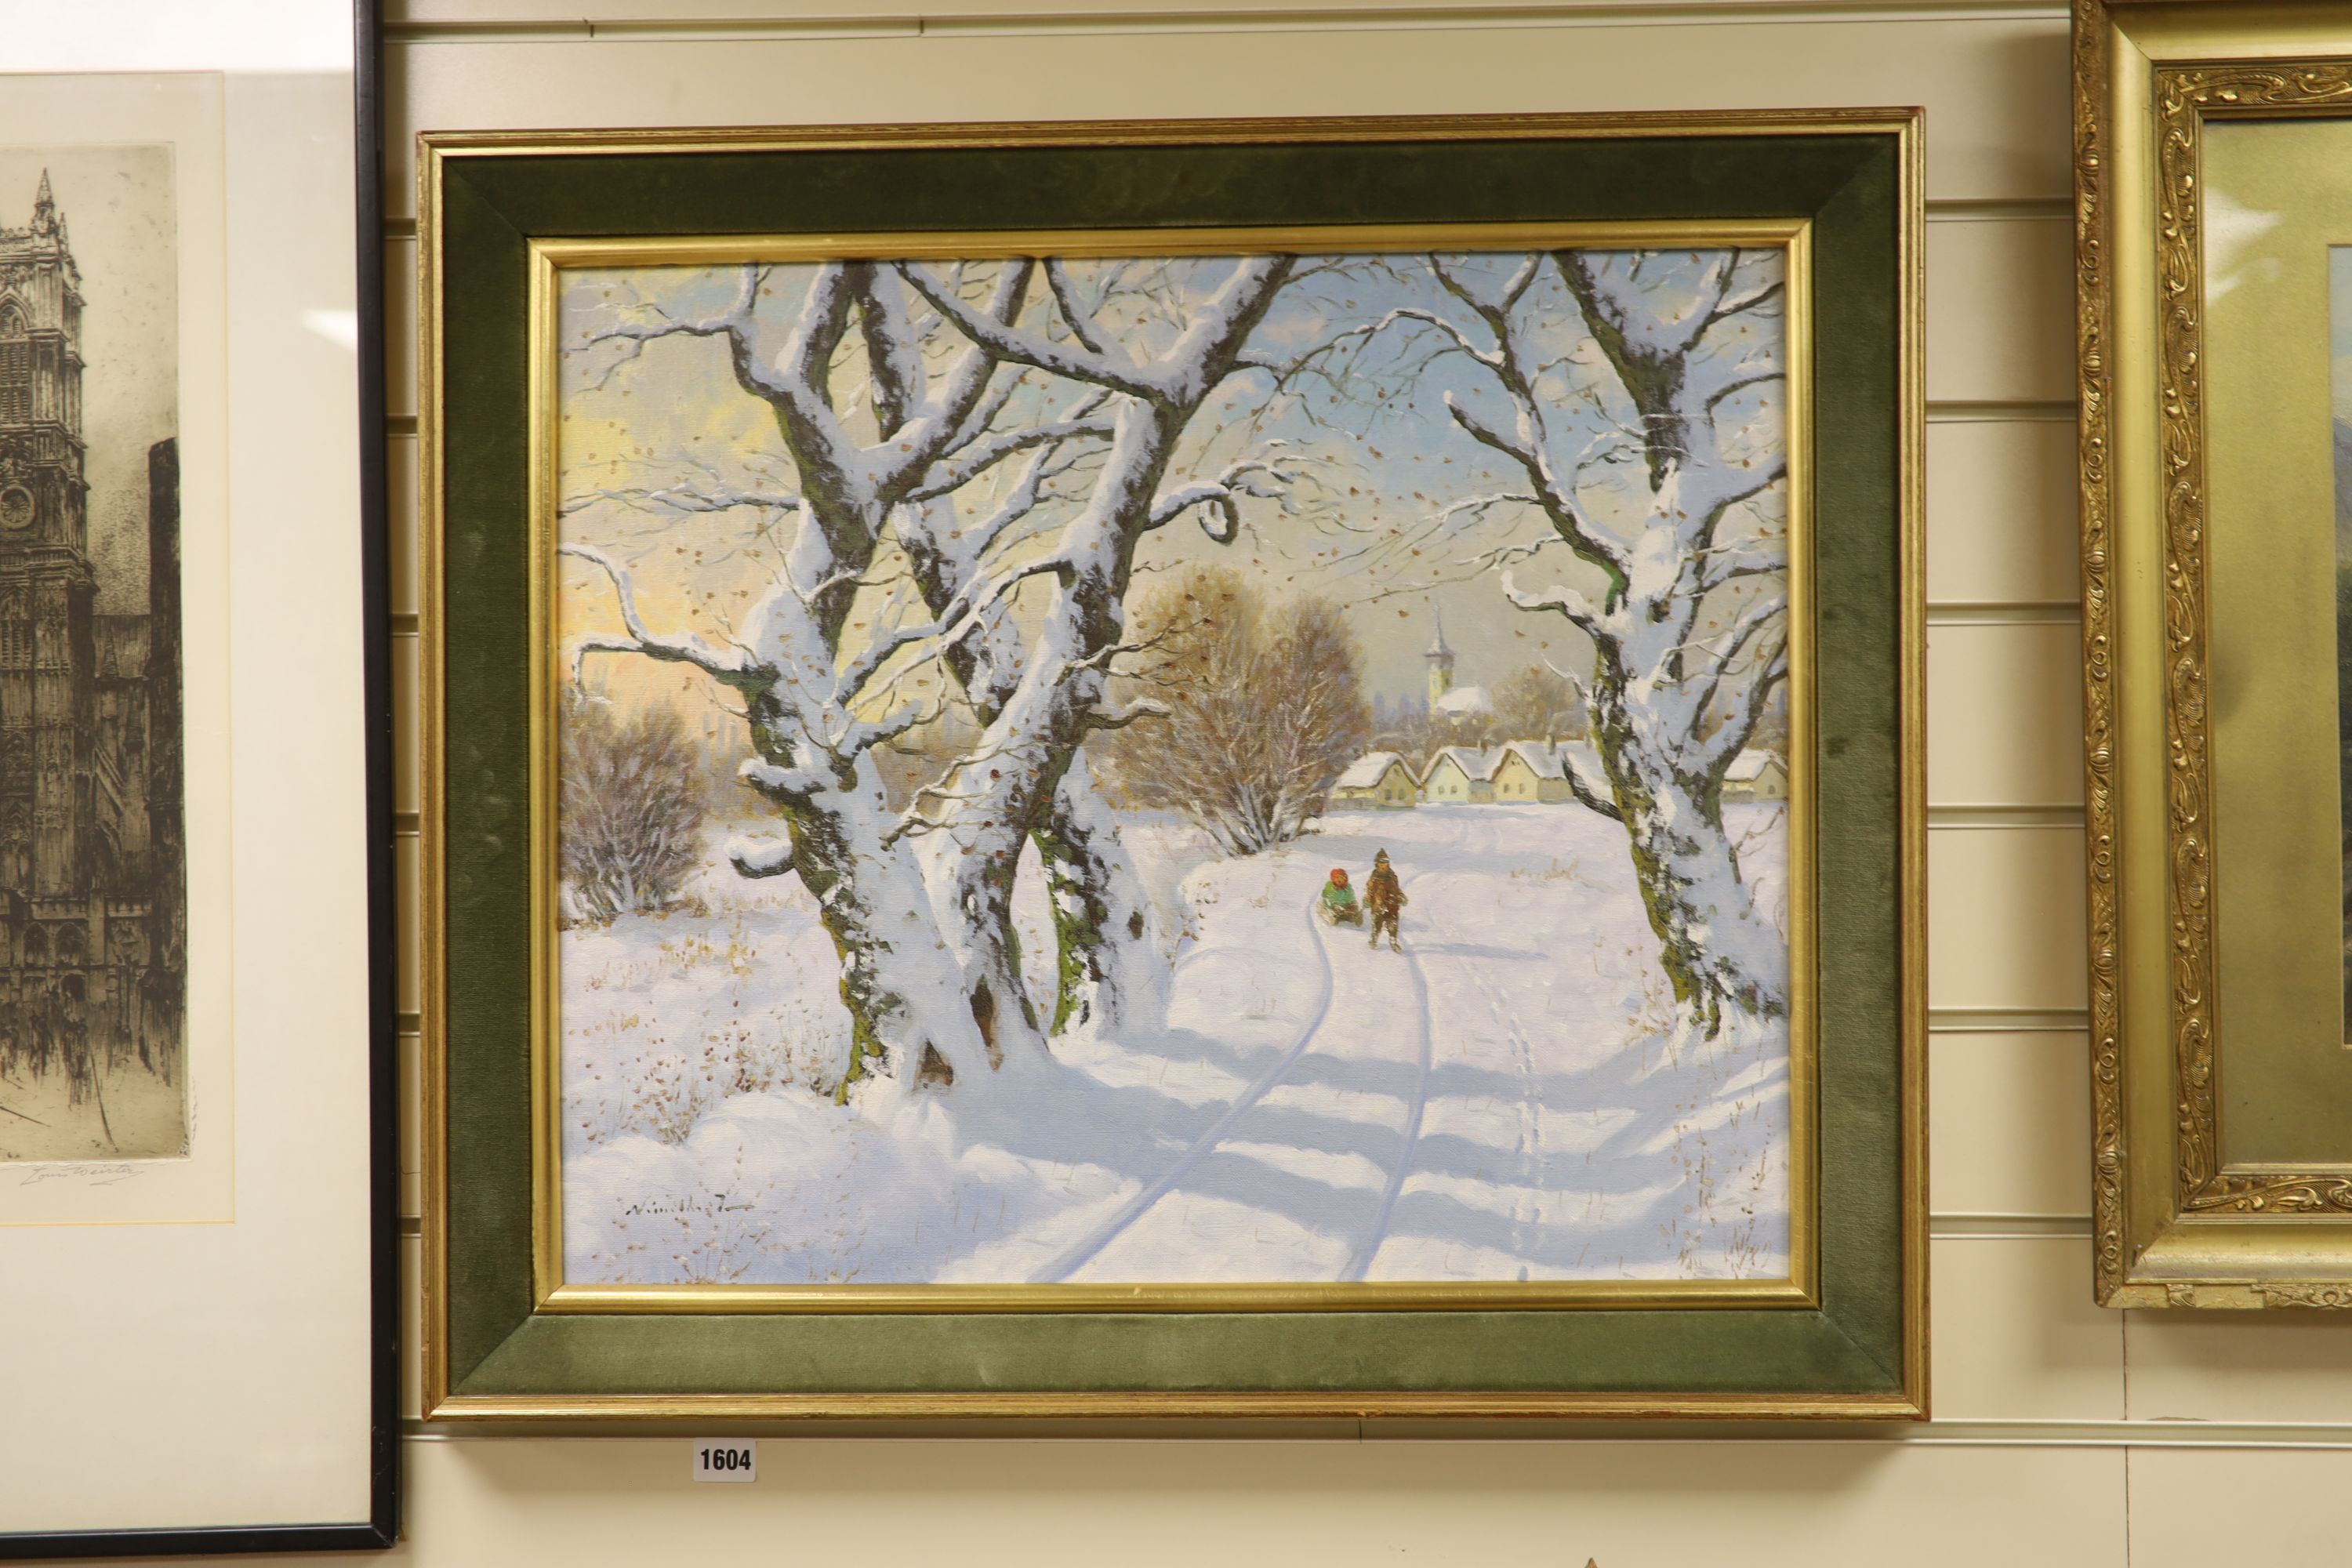 Z* Nemeth (20th century), oil on canvas, Winter landscape, 50 x 60cm